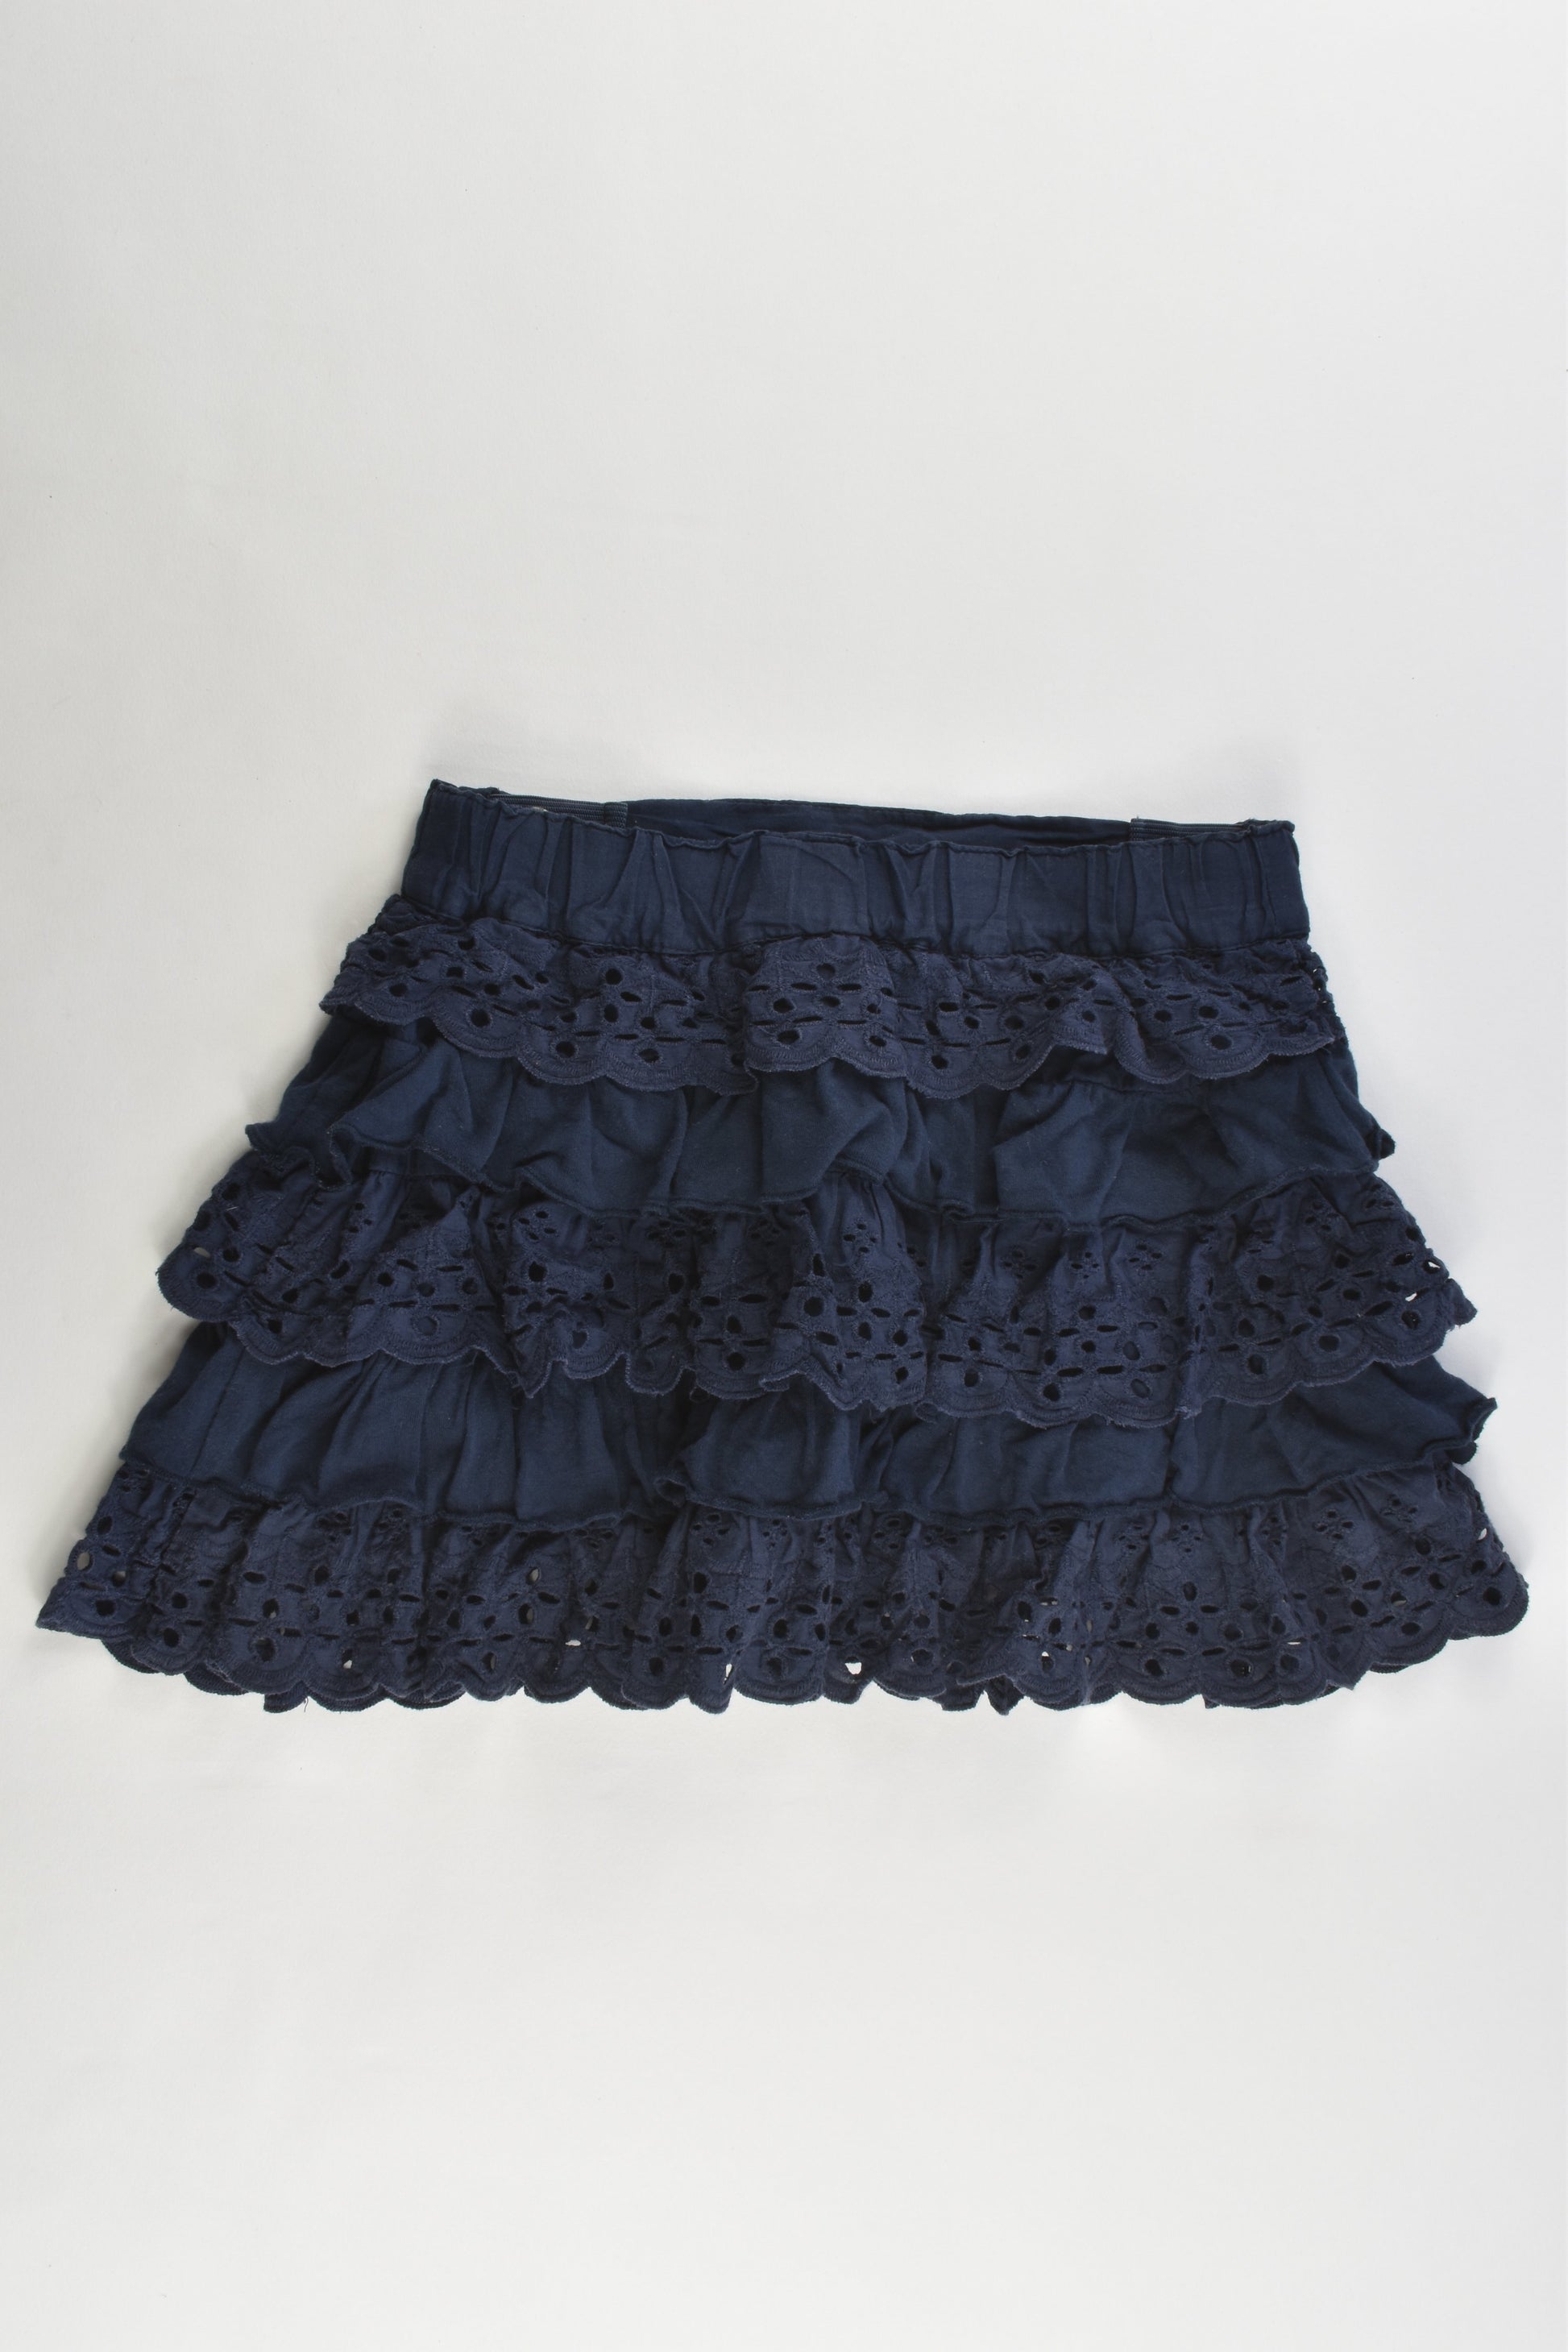 Pumpkin Patch Size 12-18 months (1) Lace Skirt